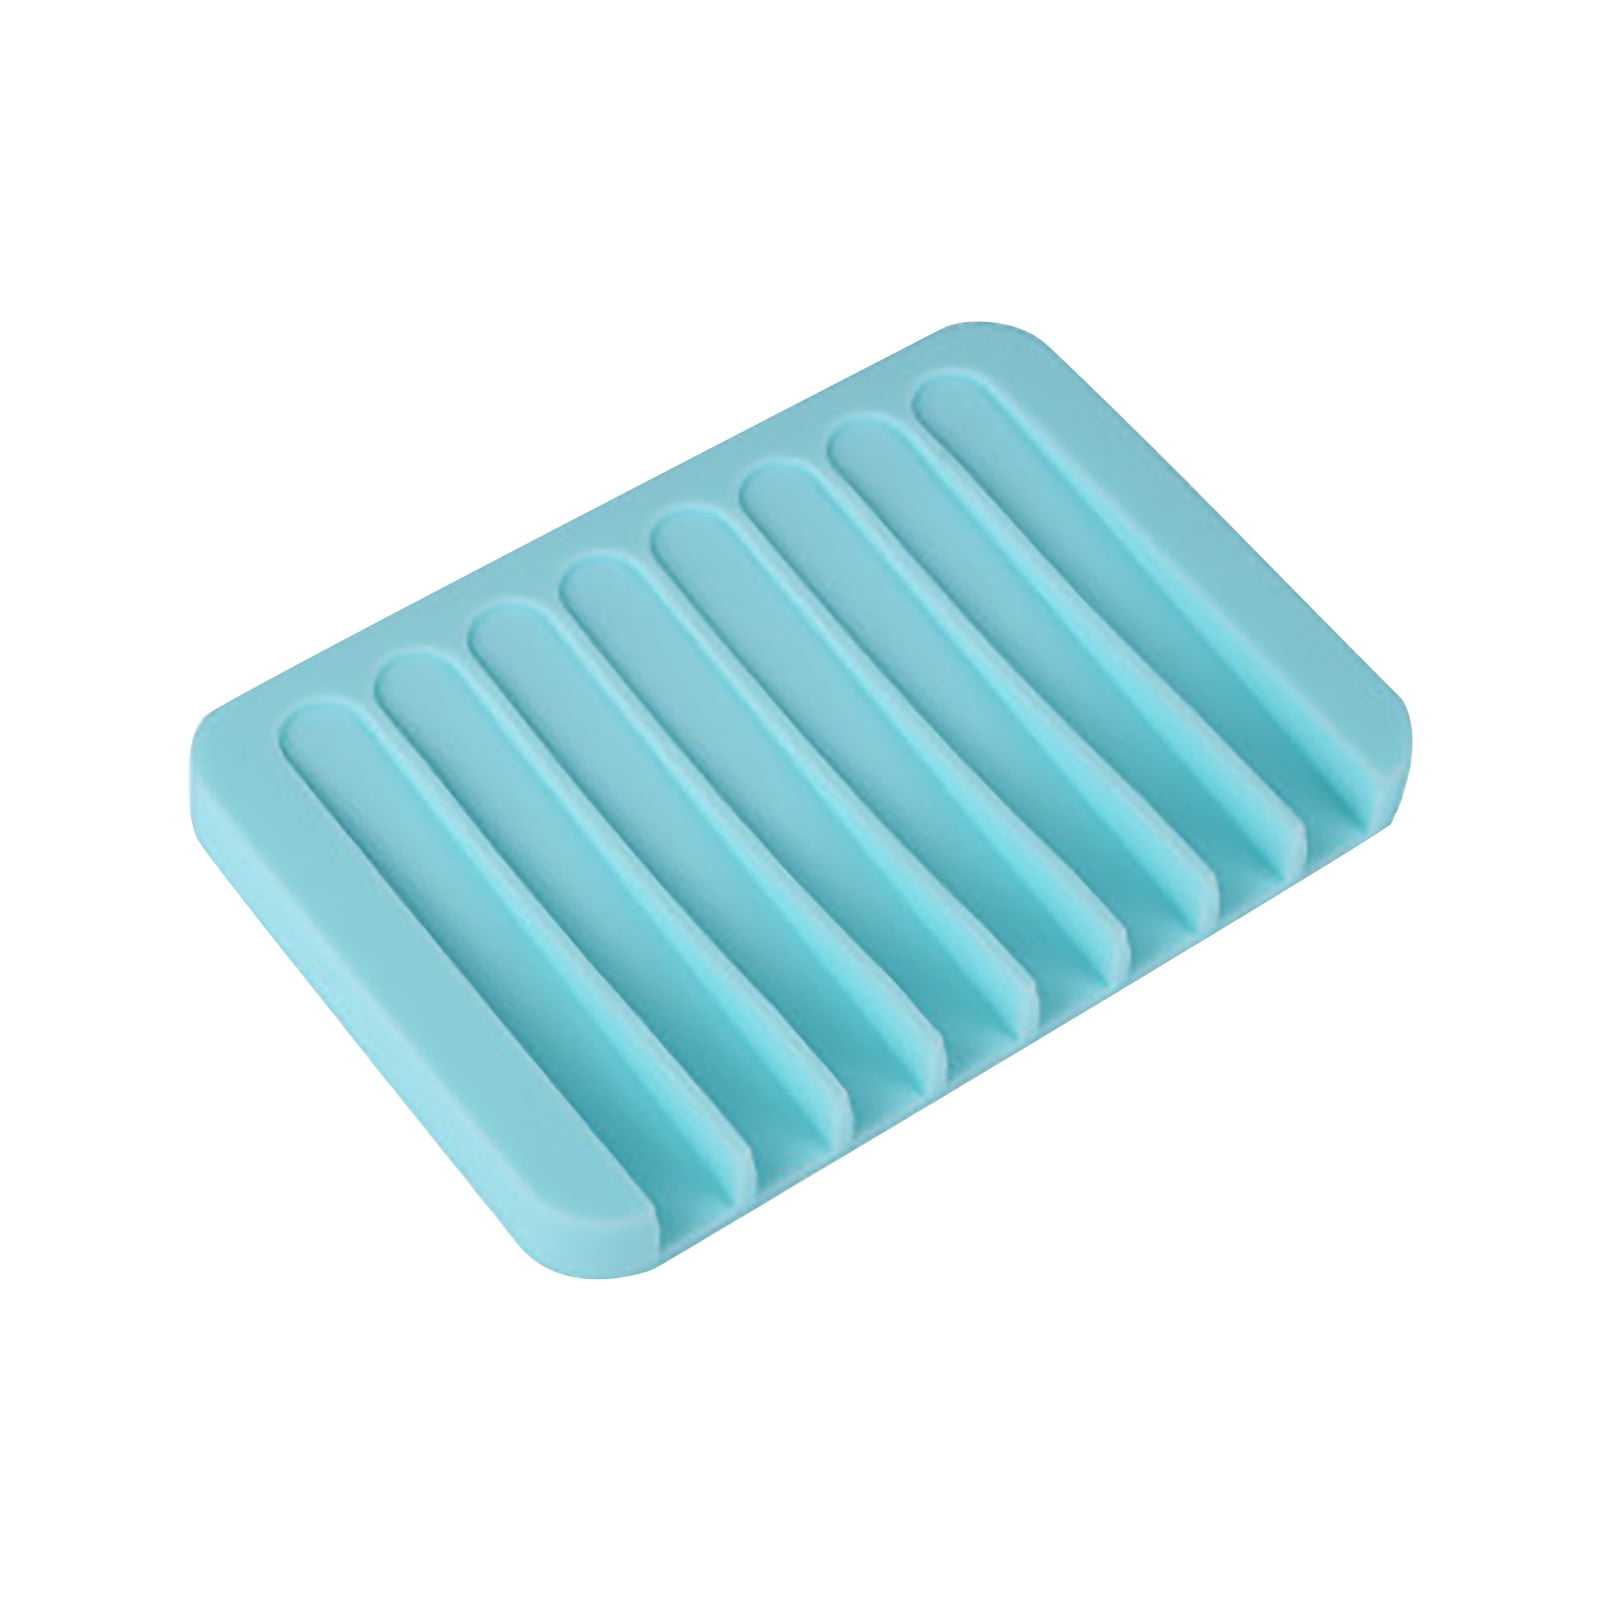 Flexible Soap Dish Plate Holder Tray Soap Holder Kitchen Bathroom Organizer 